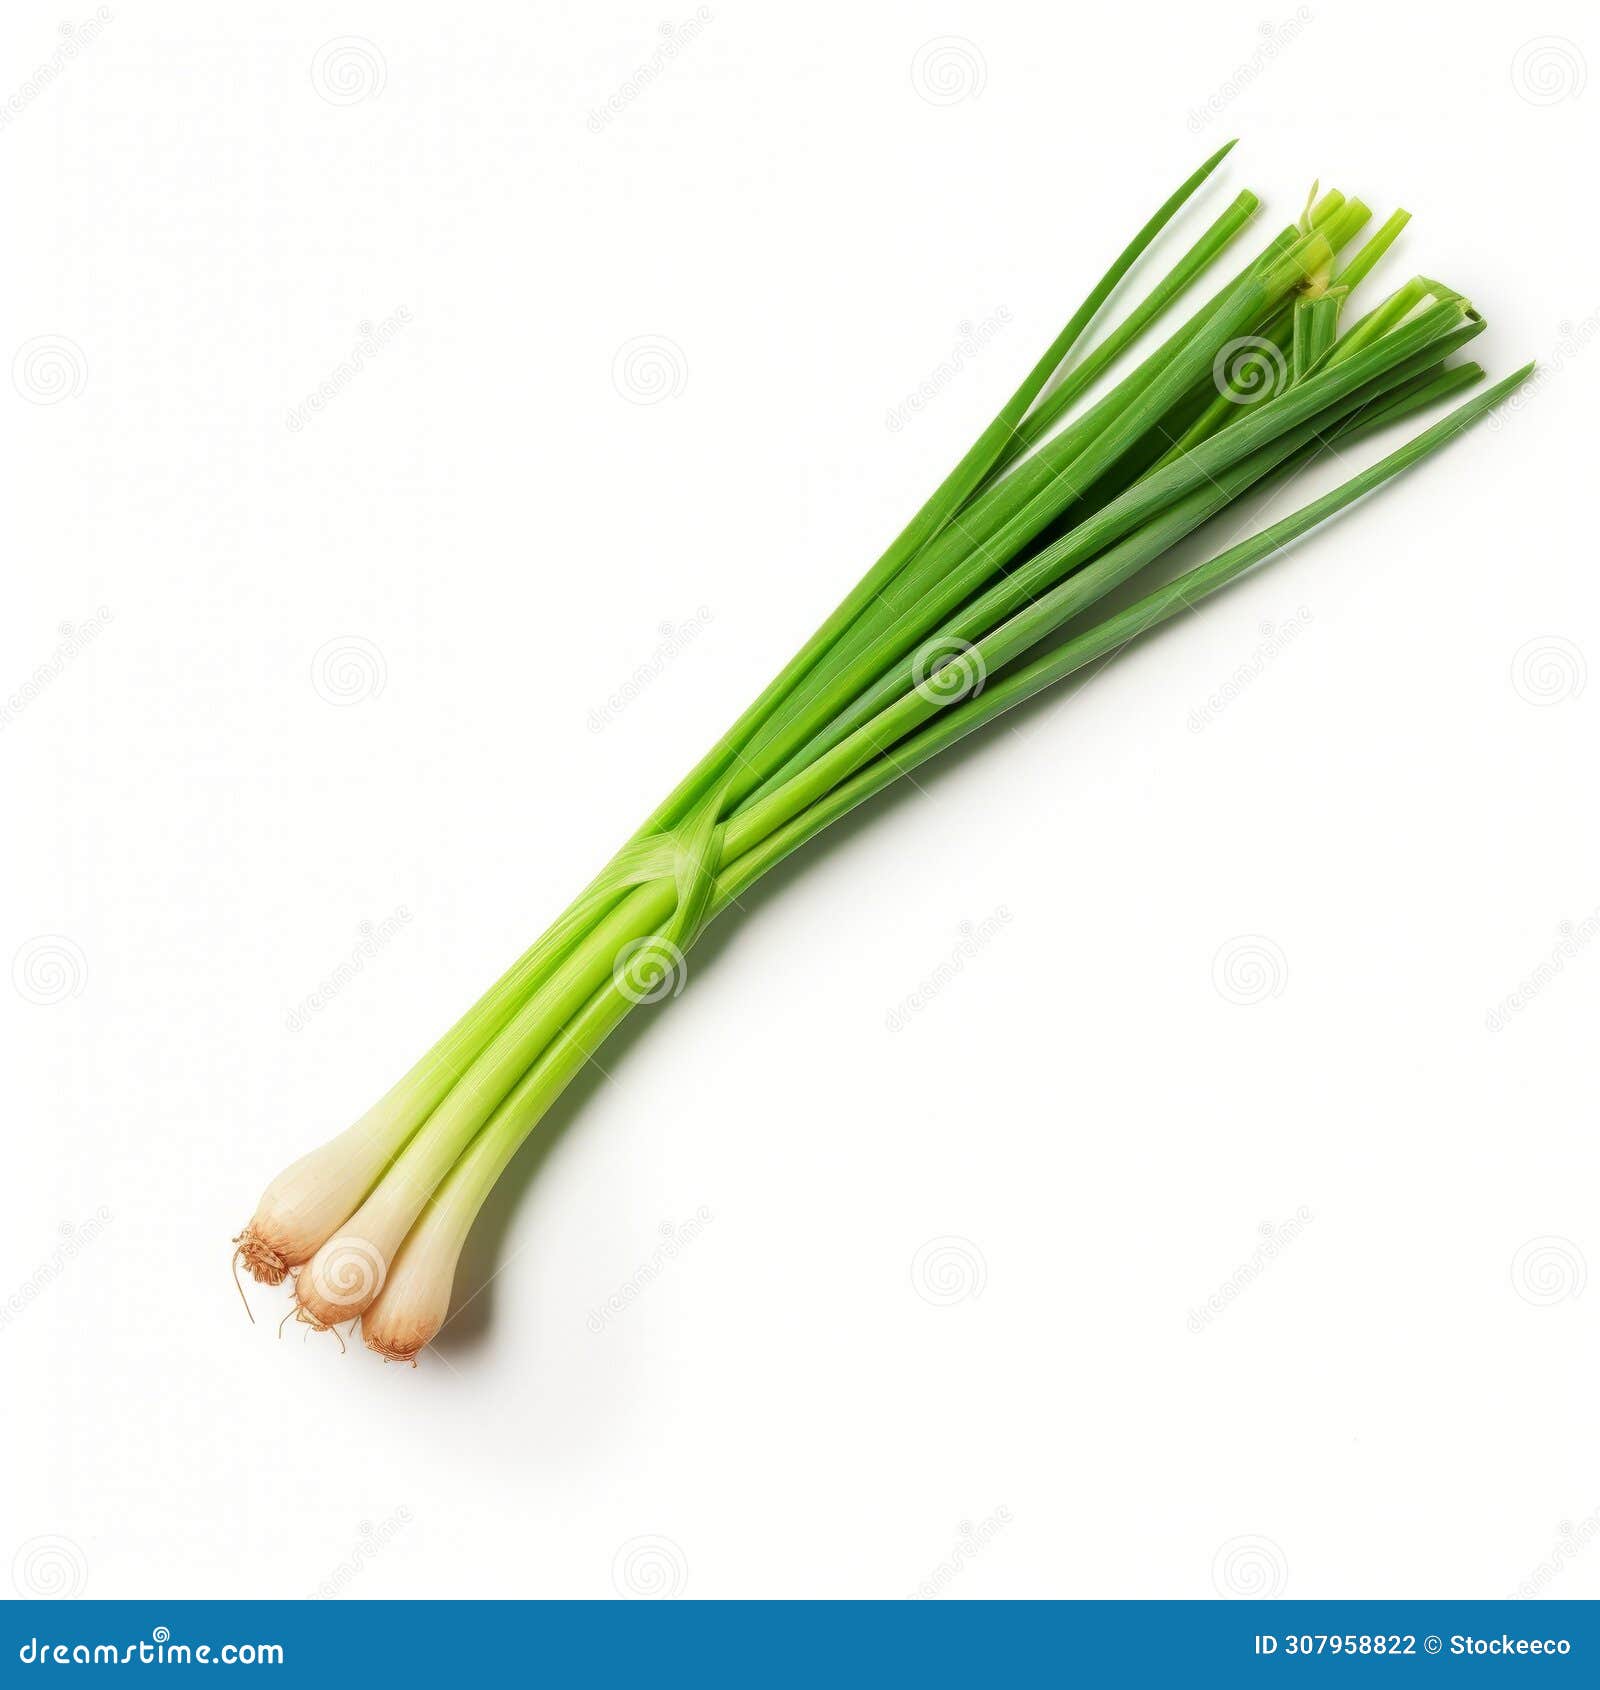 minimalist green onion: xbox 360 graphics inspired